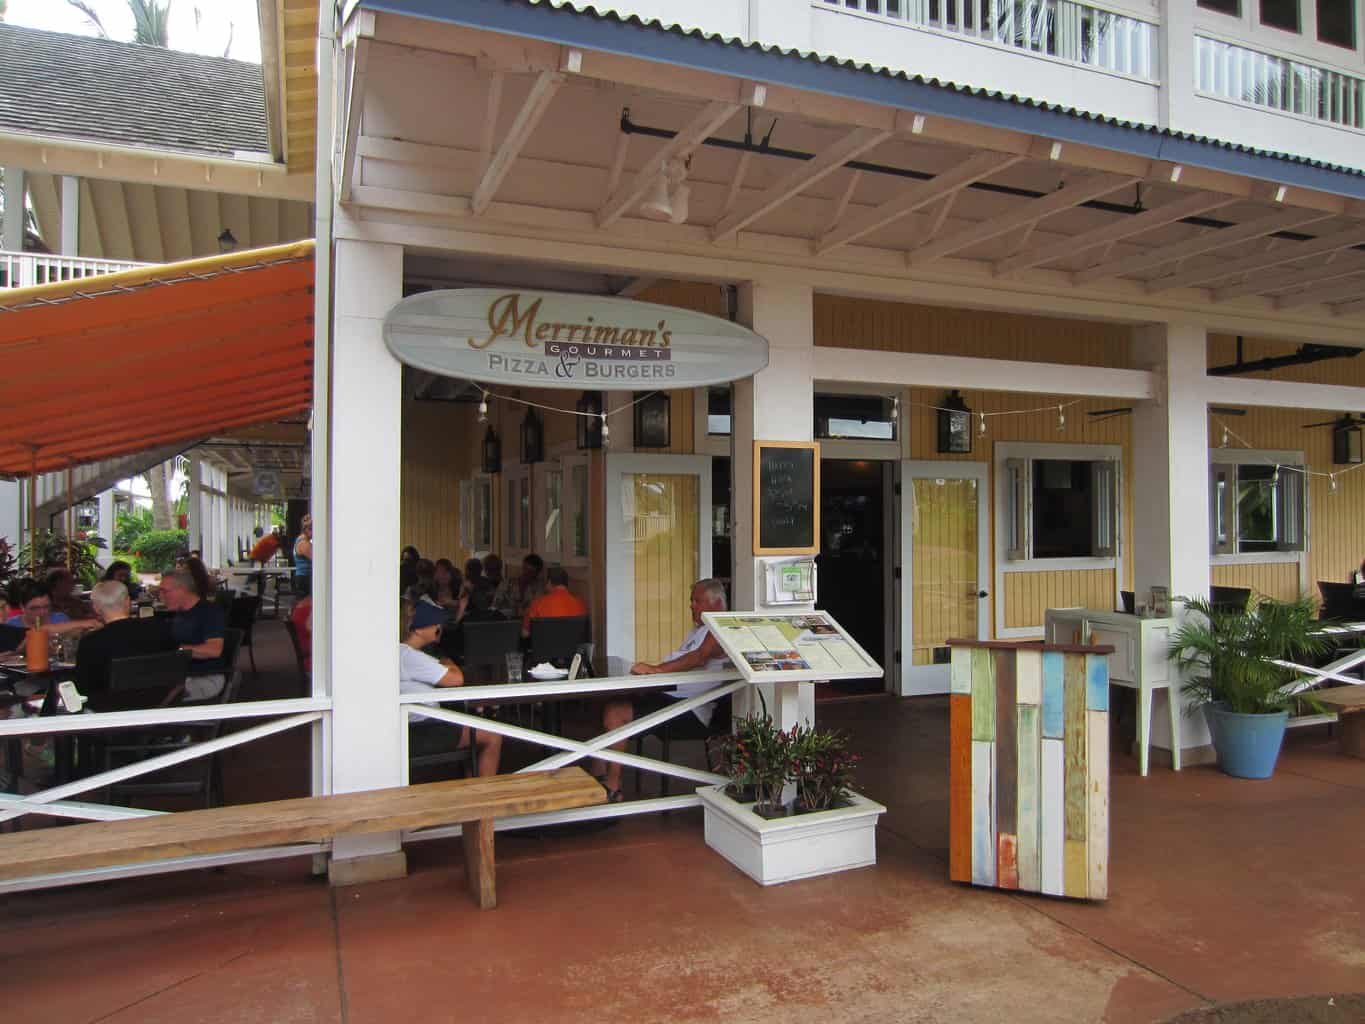 Merriman’s Gourmet Pizza & Burgers Kauai